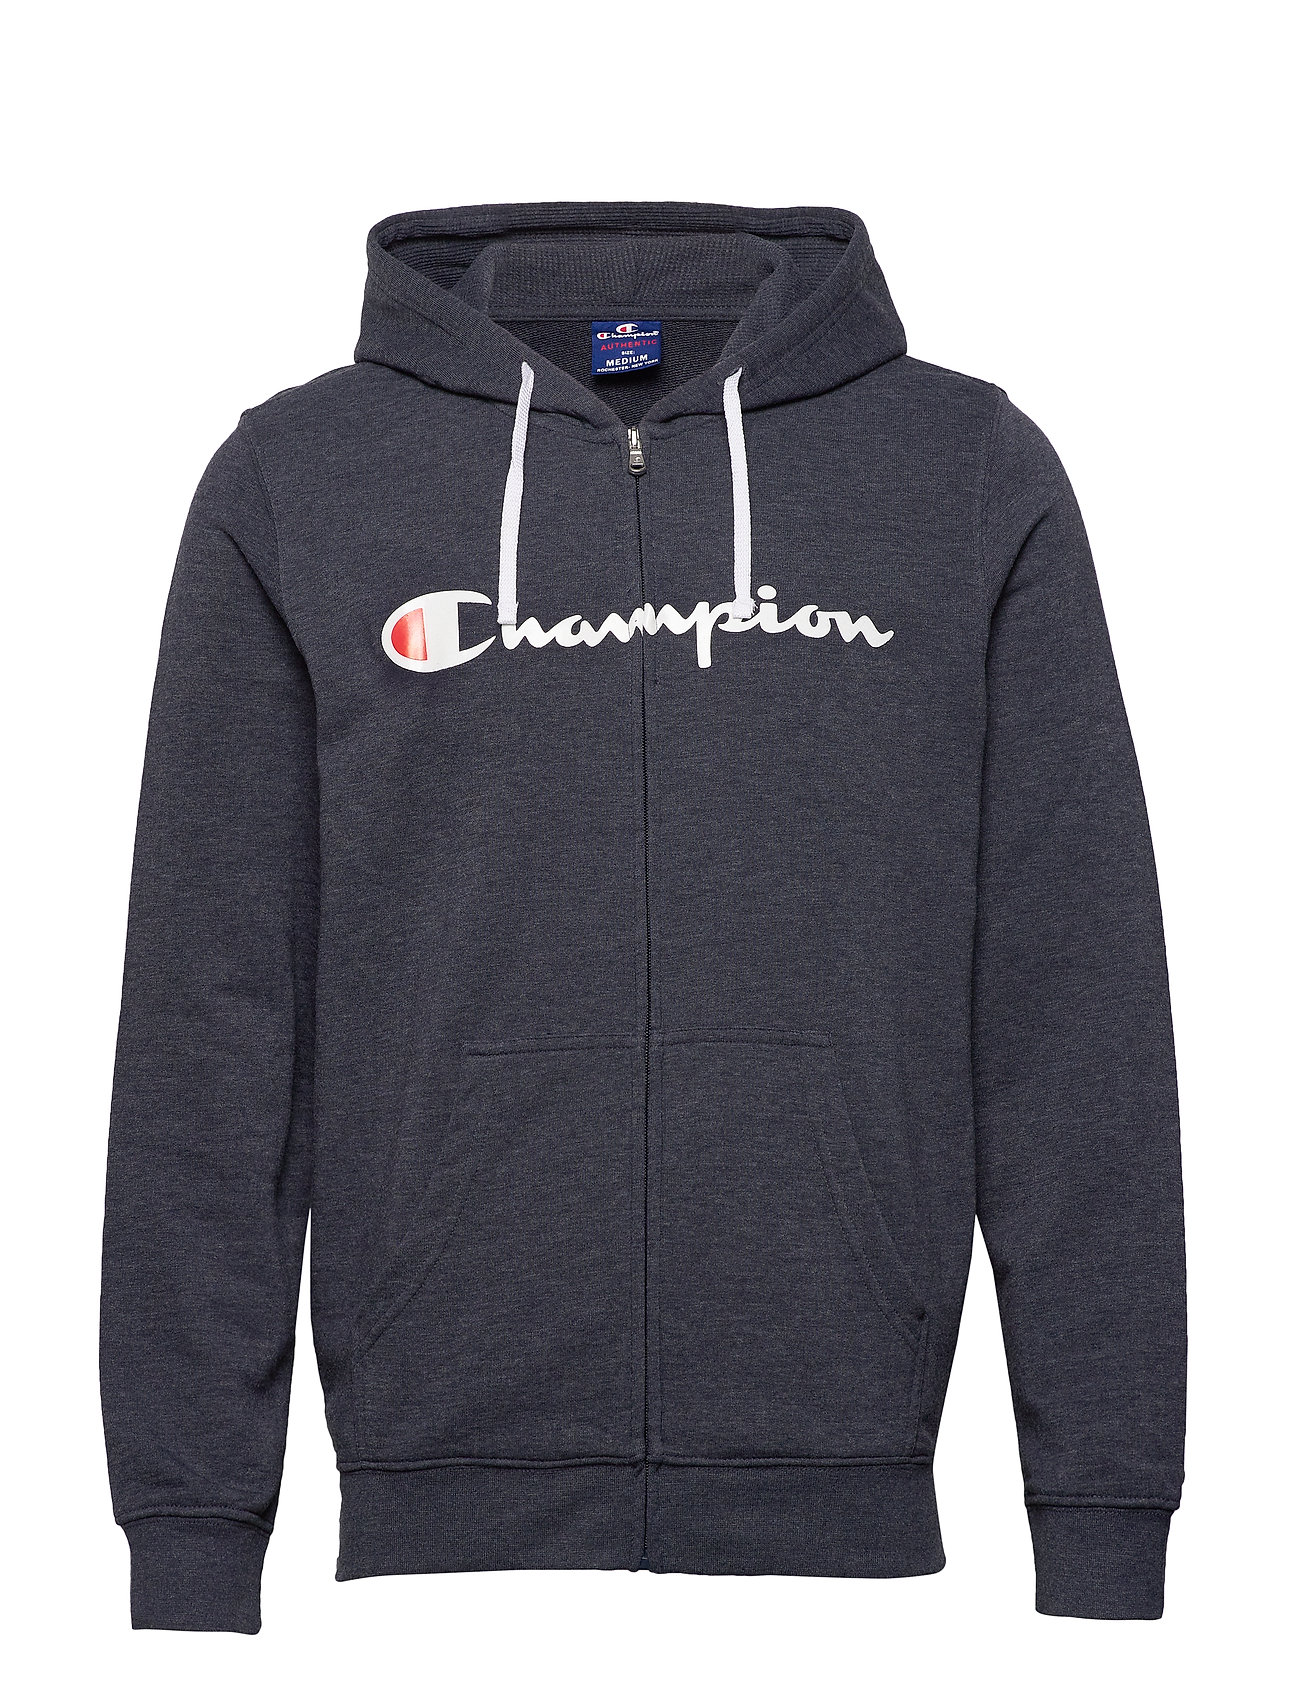 Champion Hooded Full Sweatshirt (Navy 